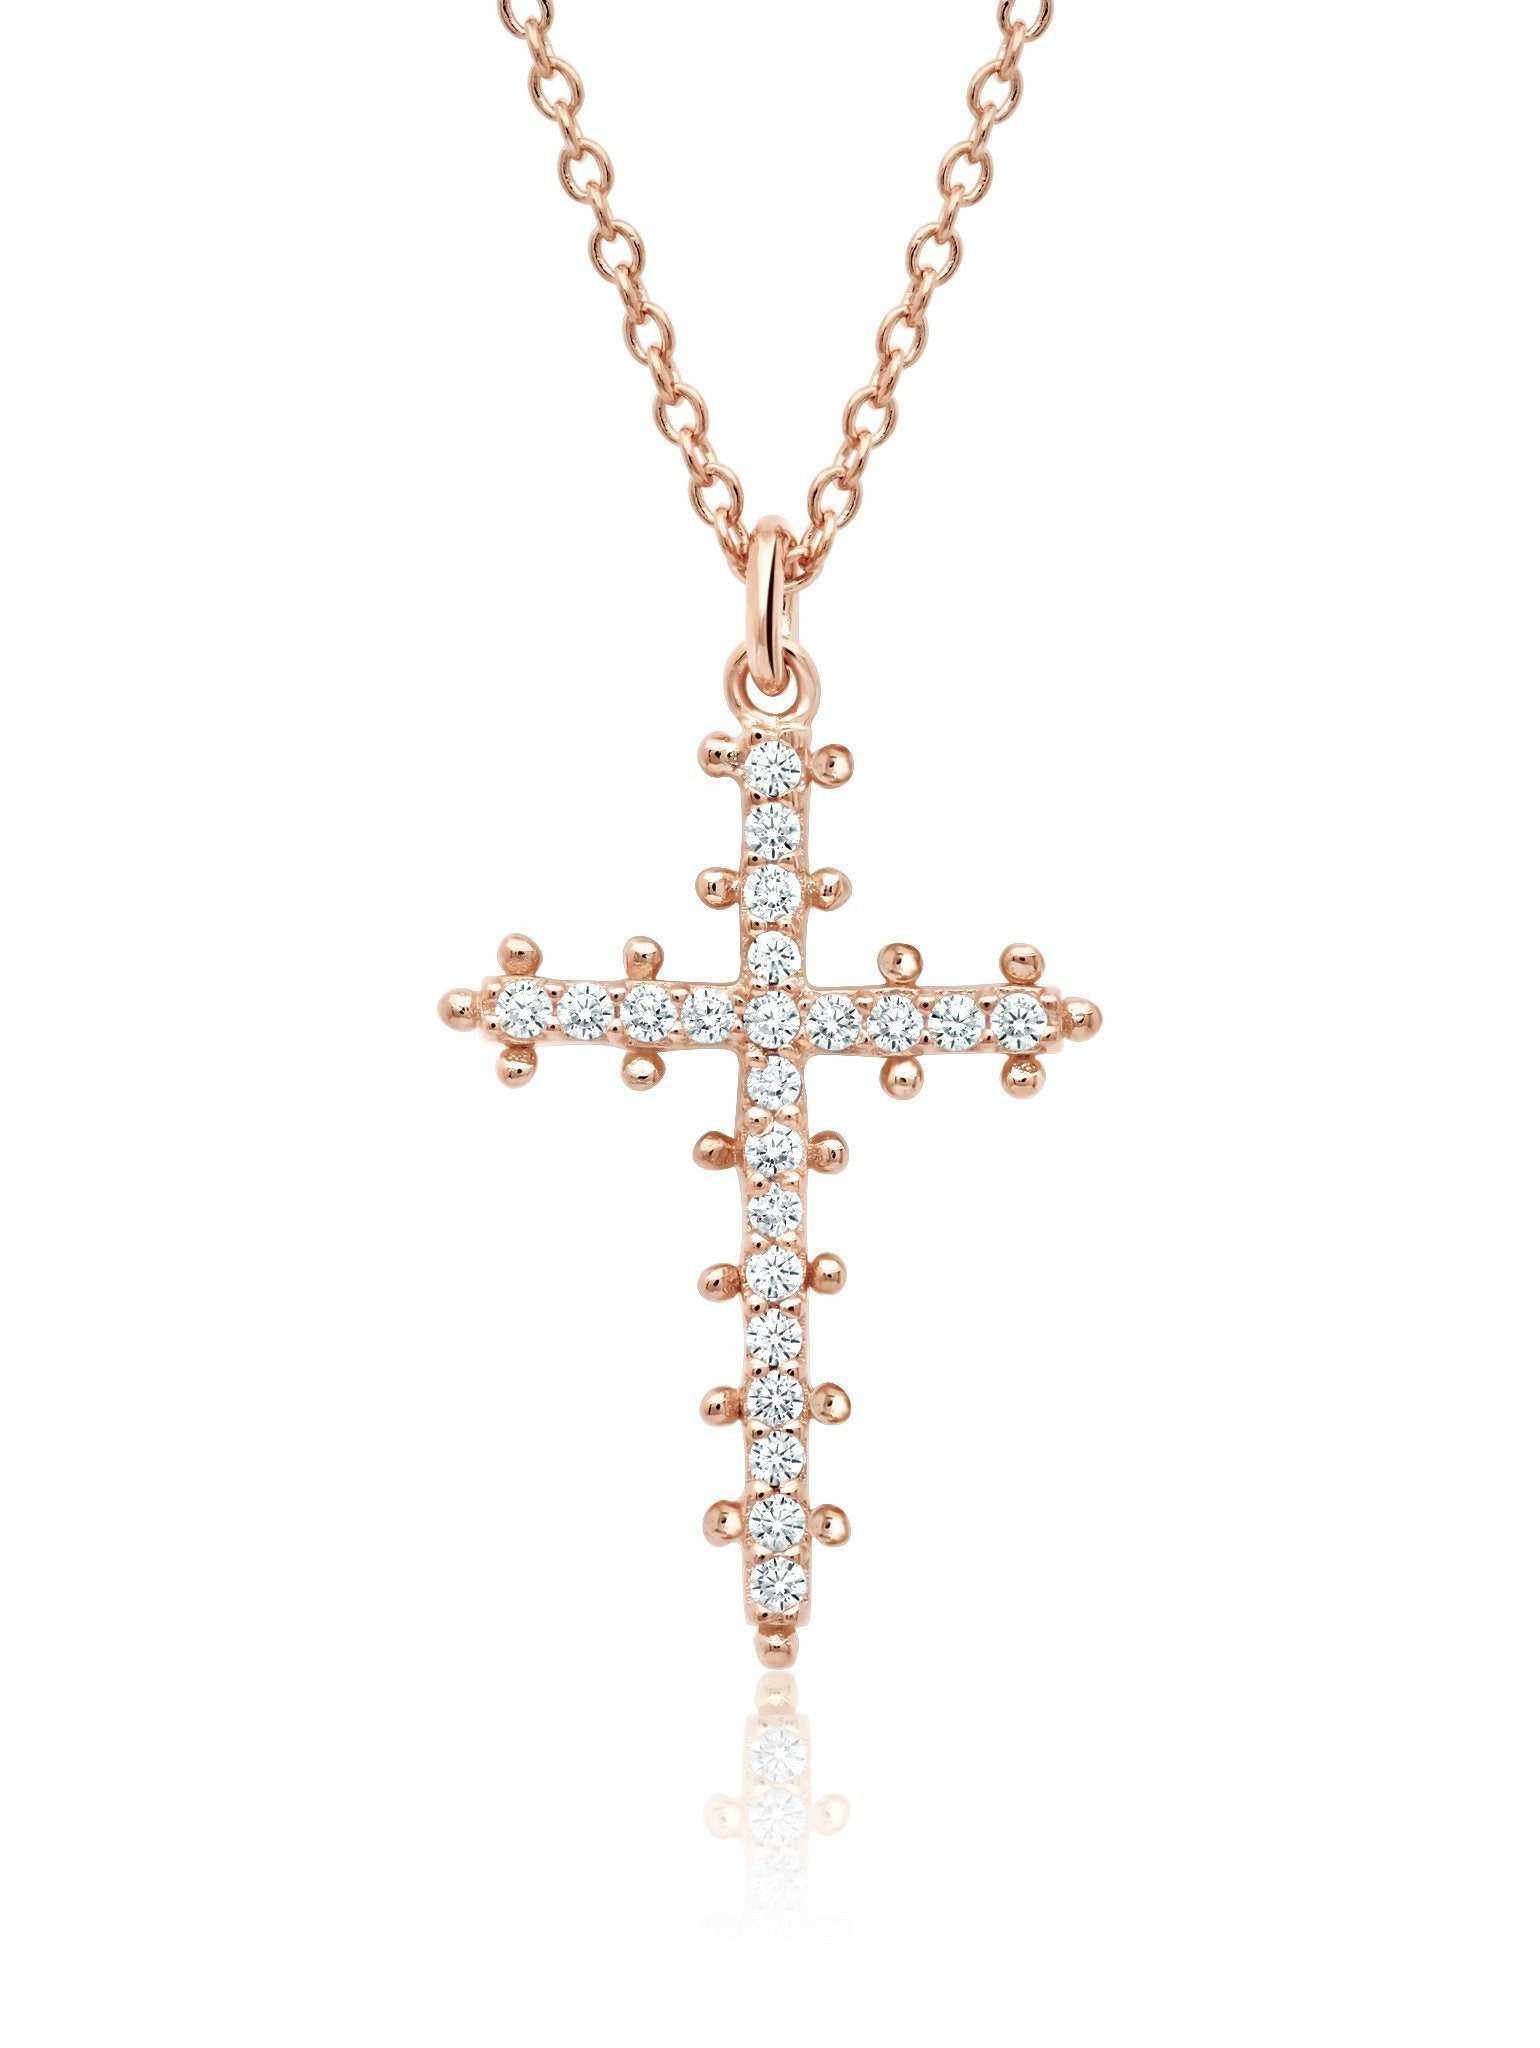 Crislu Jewelry Crislu Motif Cross Pendant Necklace finished in 18kt Rose Gold